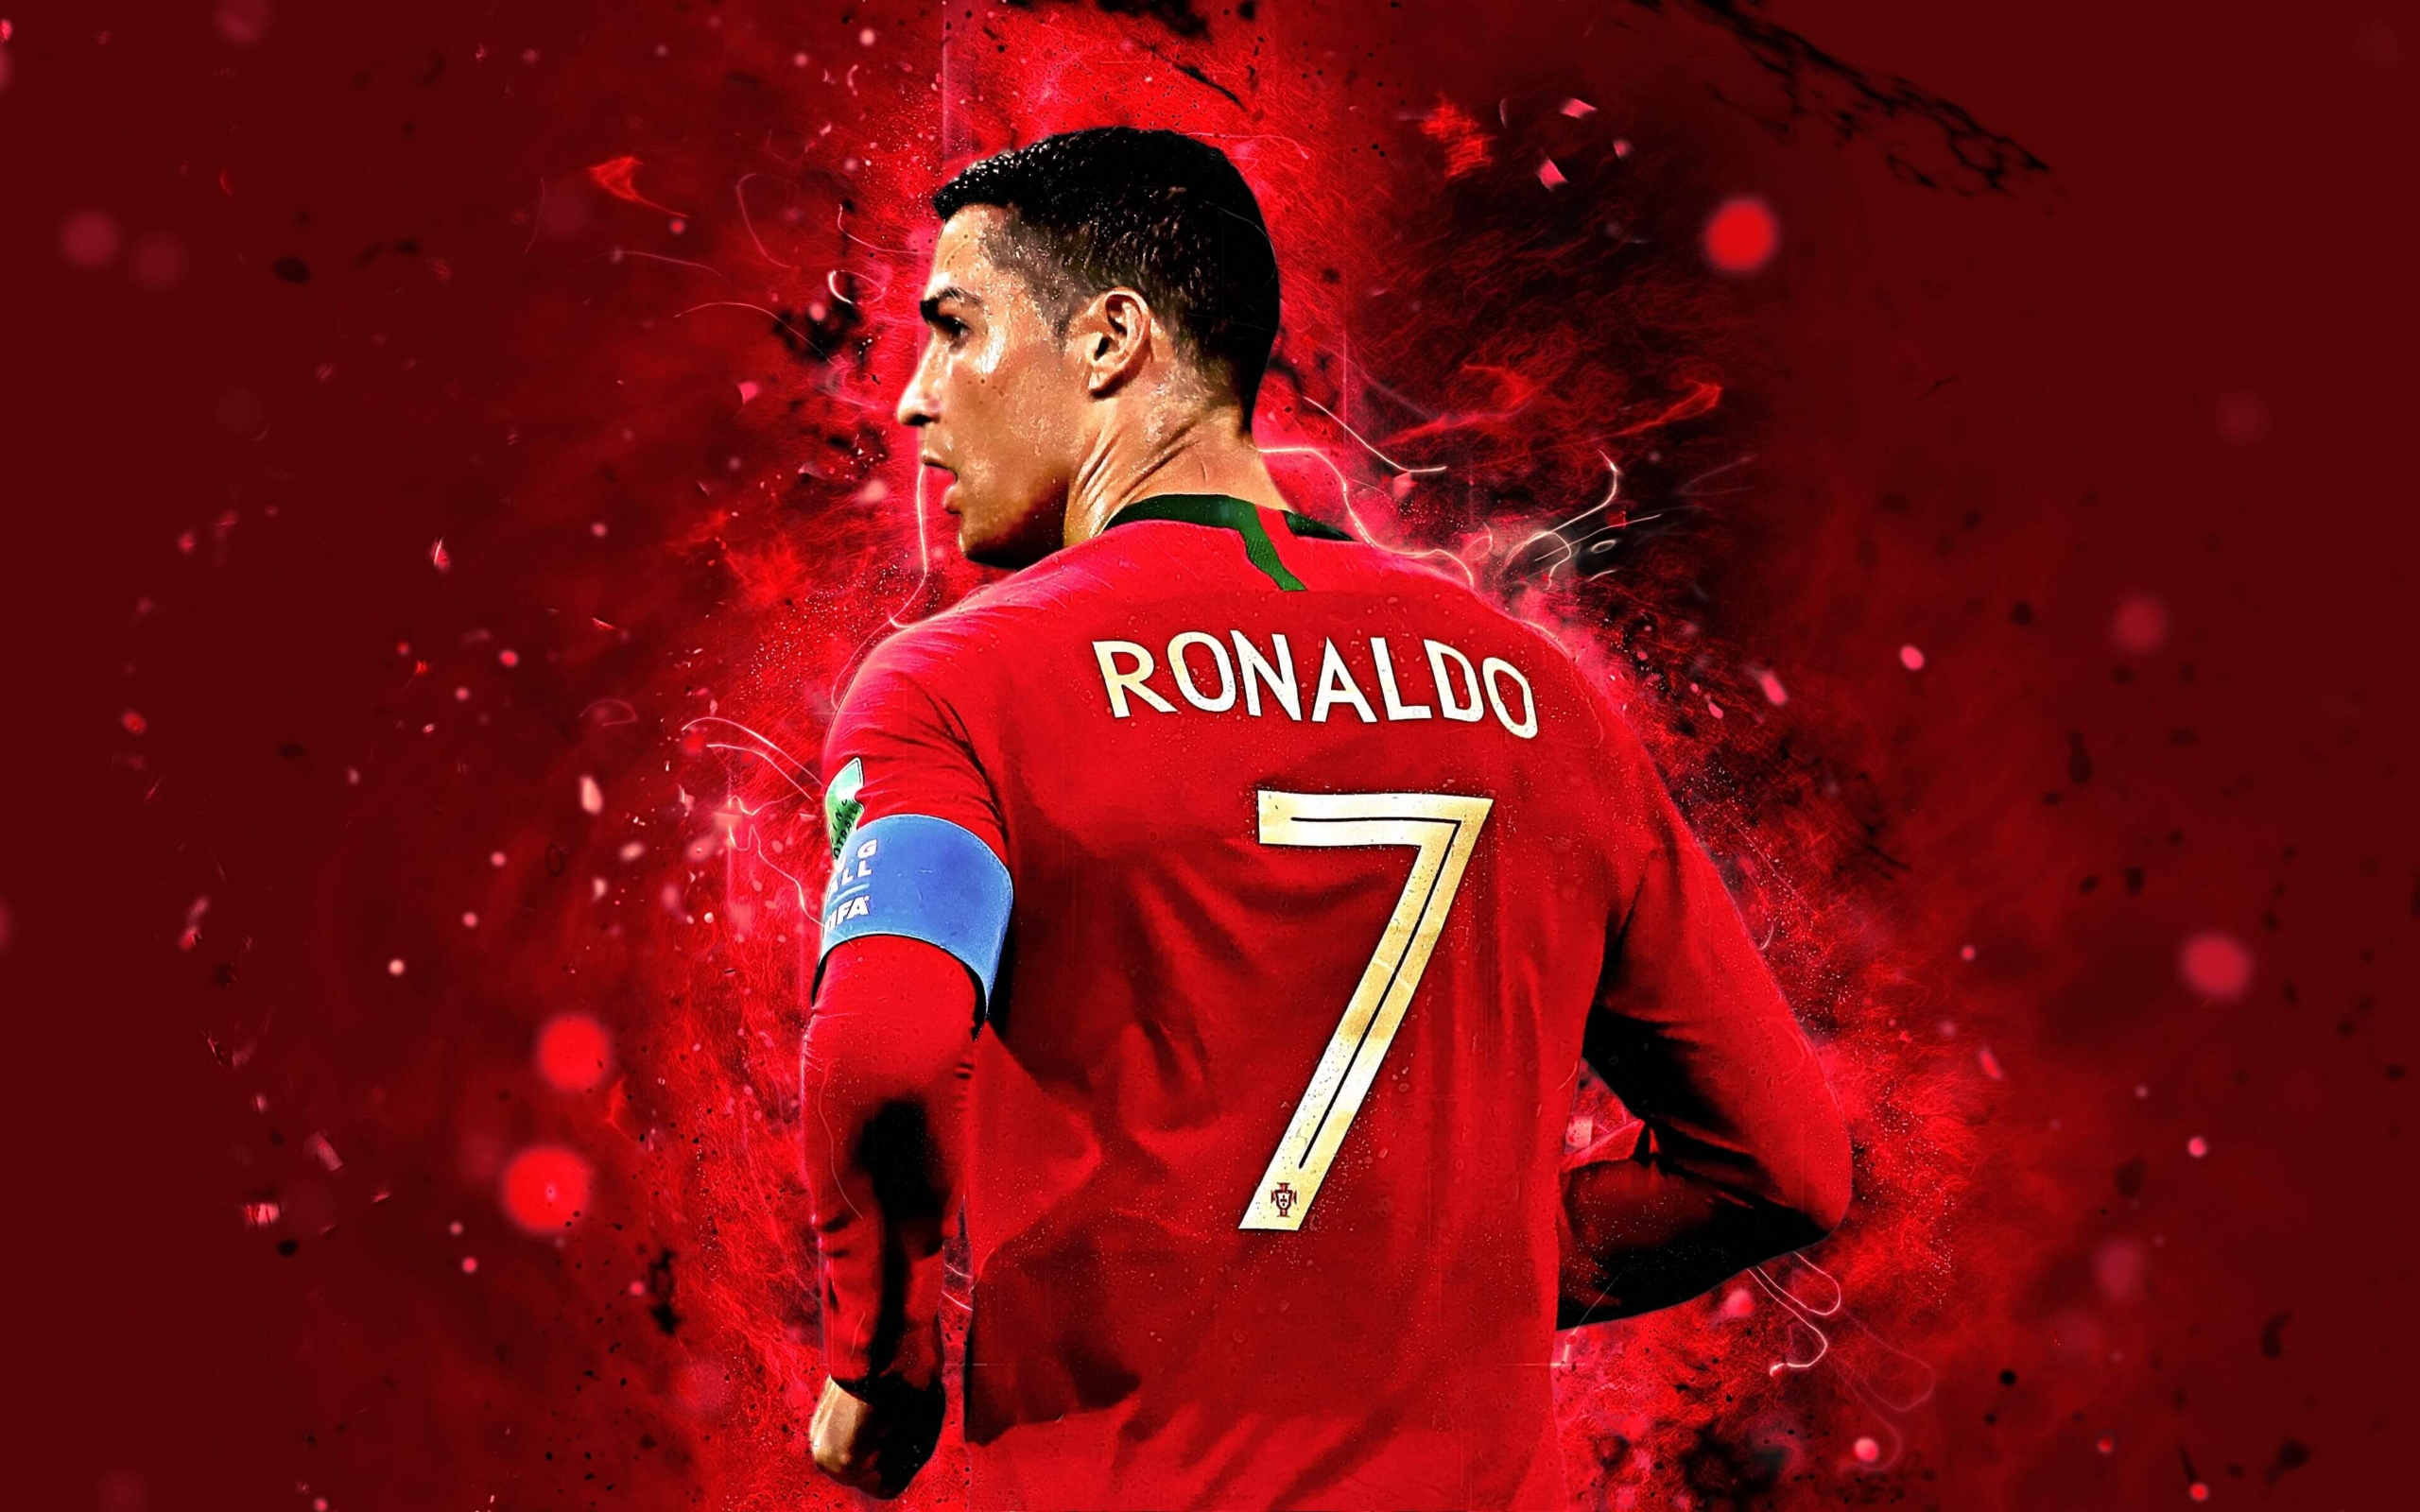 Christiano Ronaldo Wallpaper on Behance